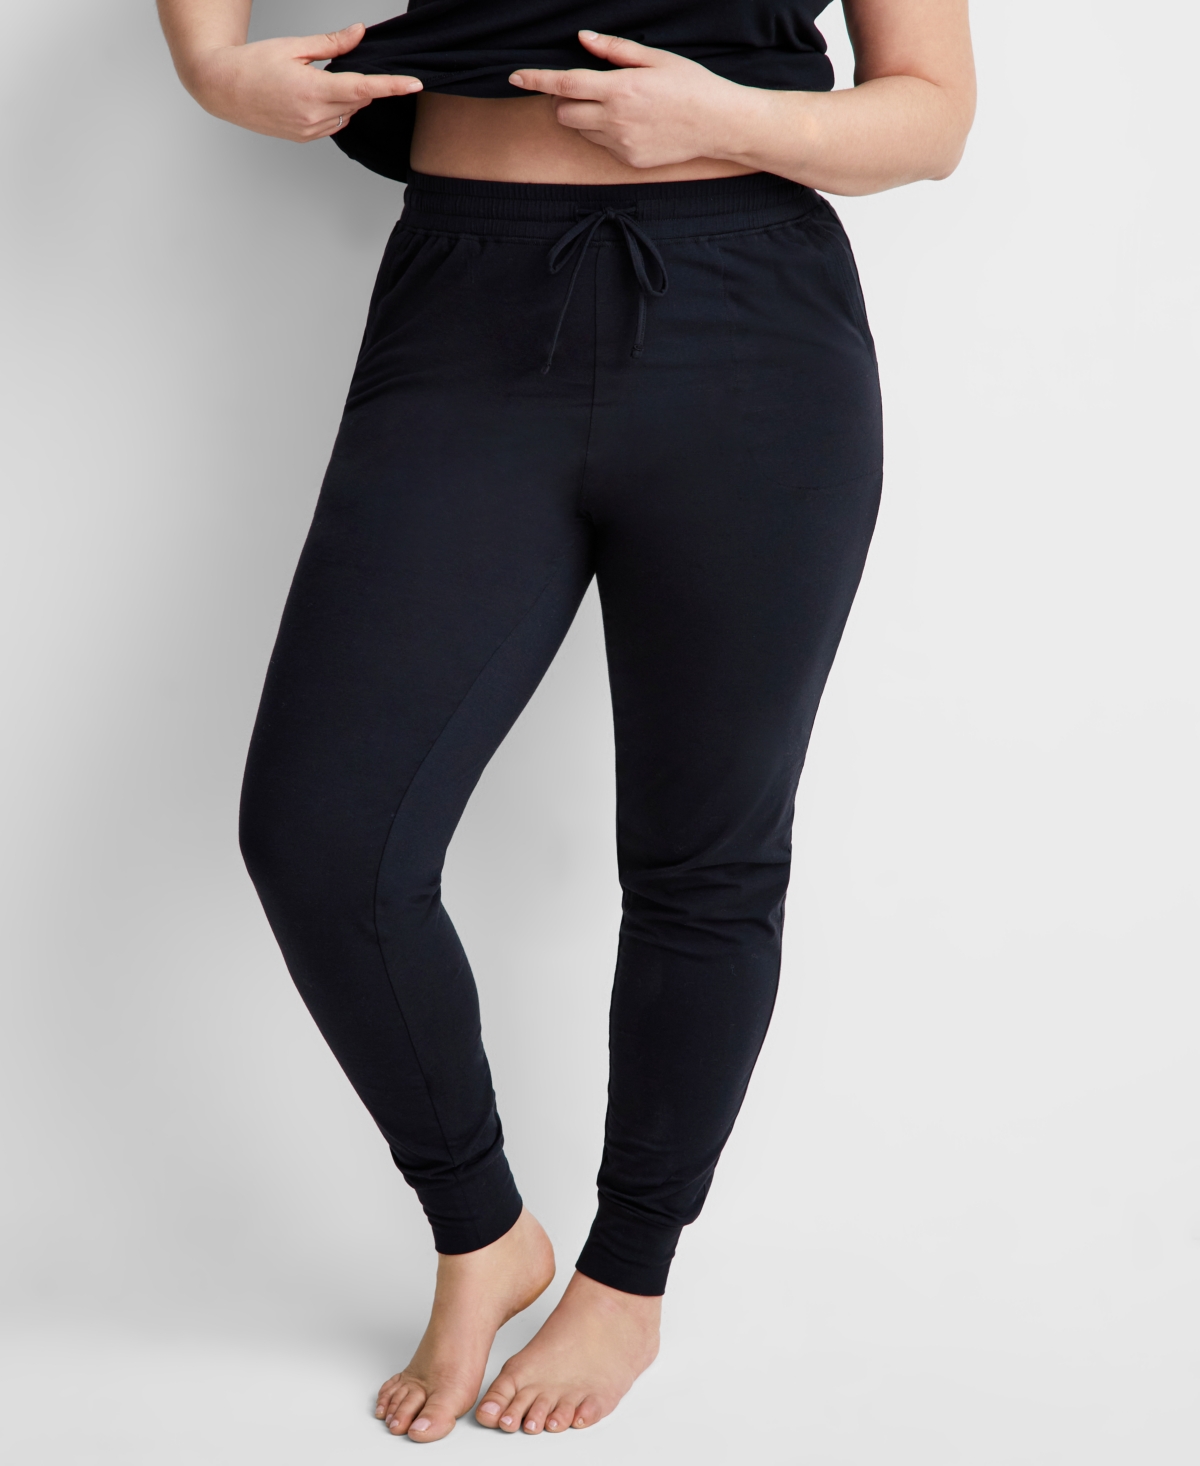 Women's Jogger Pajama Pants Xs-3X, Created for Macy's - Pressed Raport